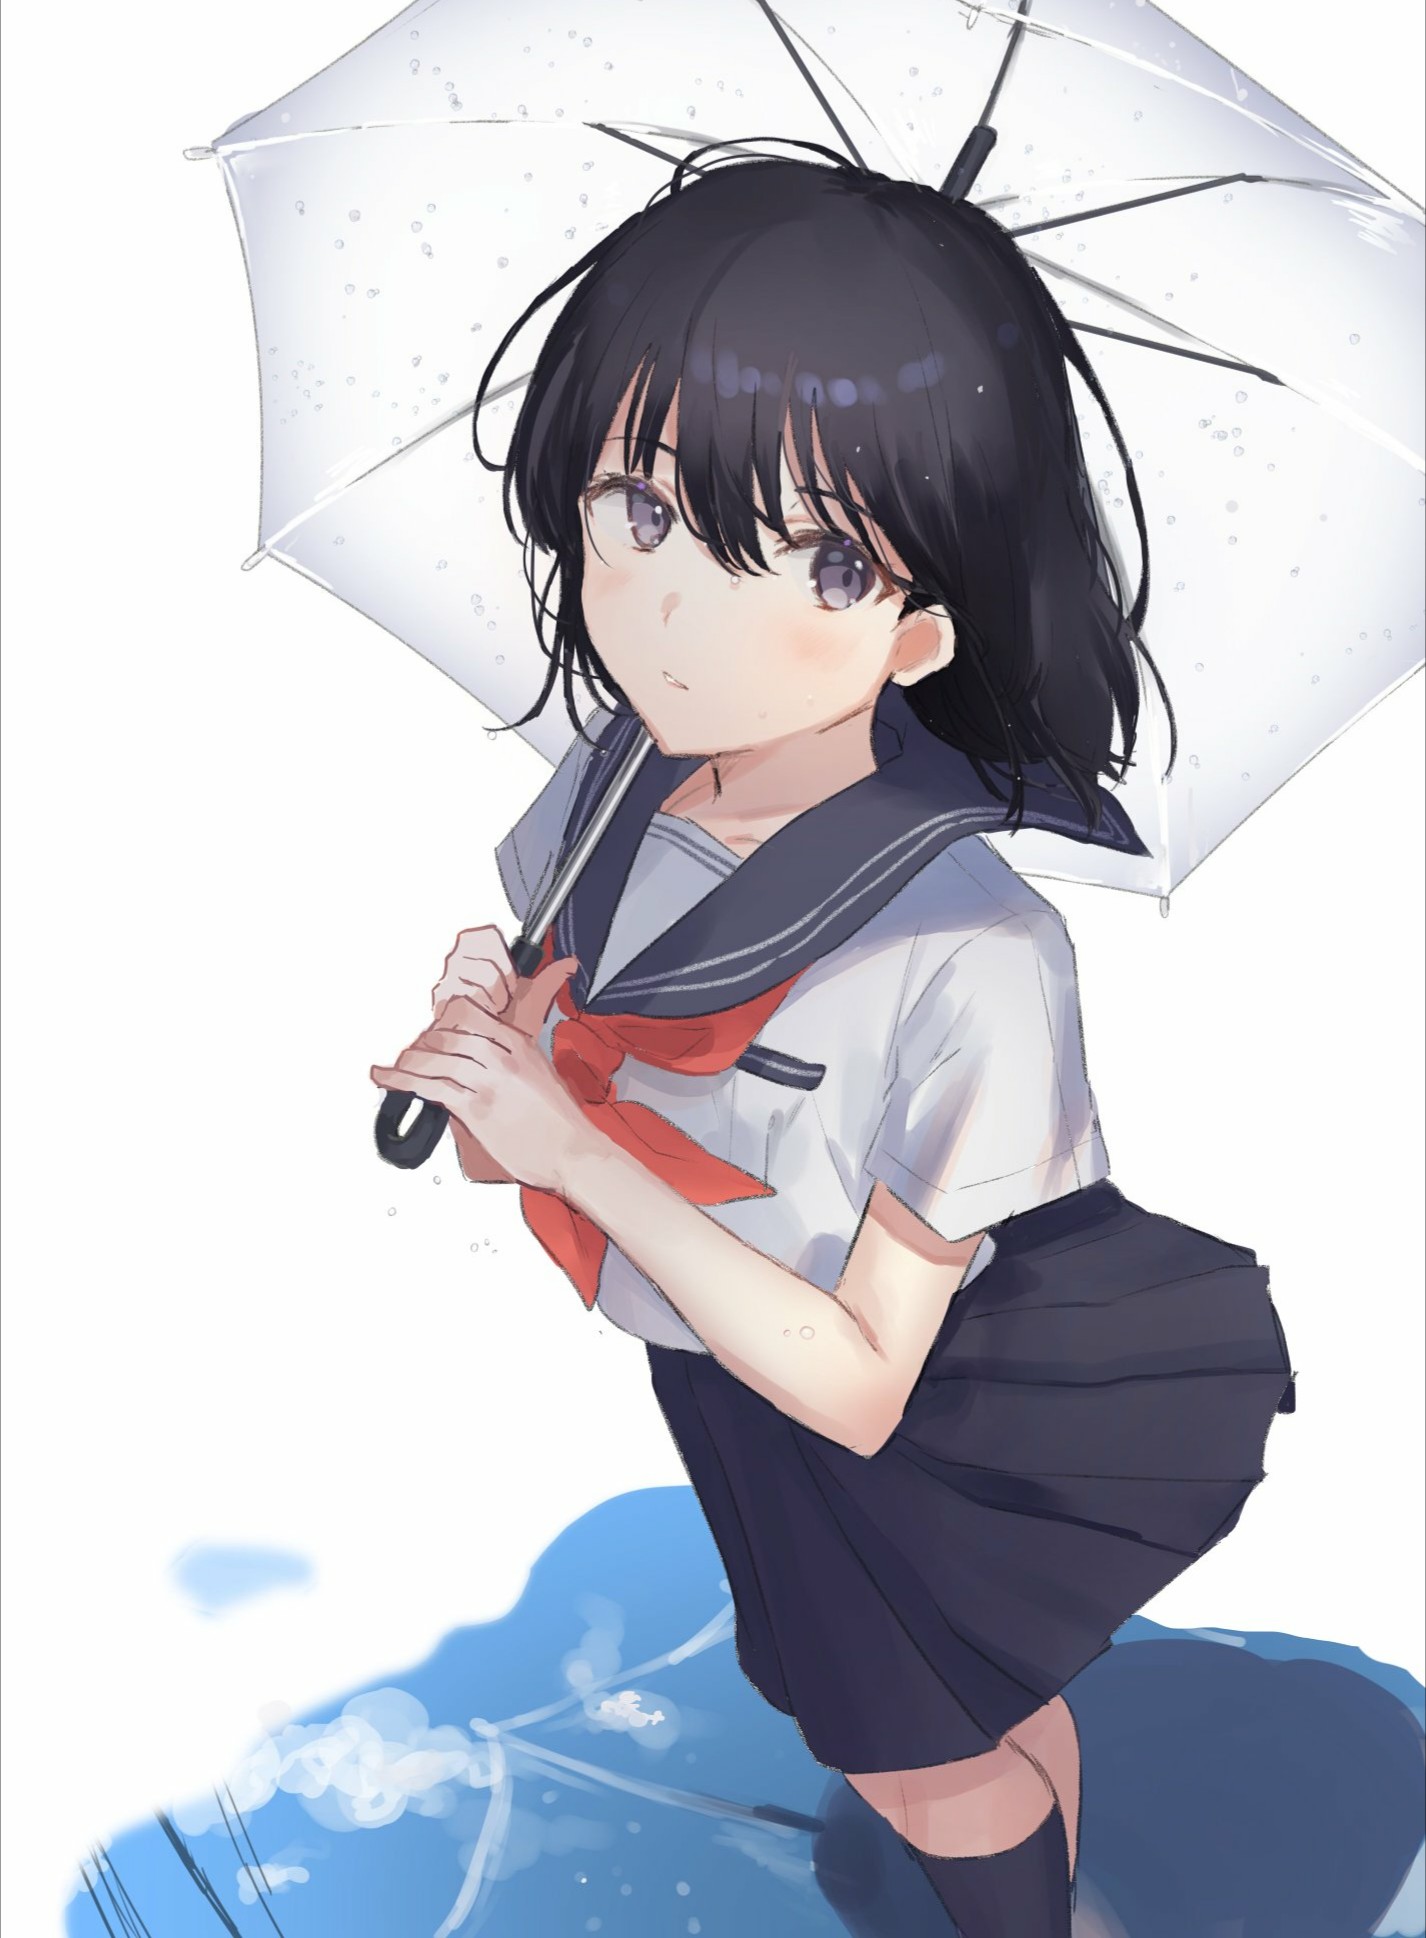 Anime 1426x1938 anime anime girls Oyuyu dark hair umbrella school uniform